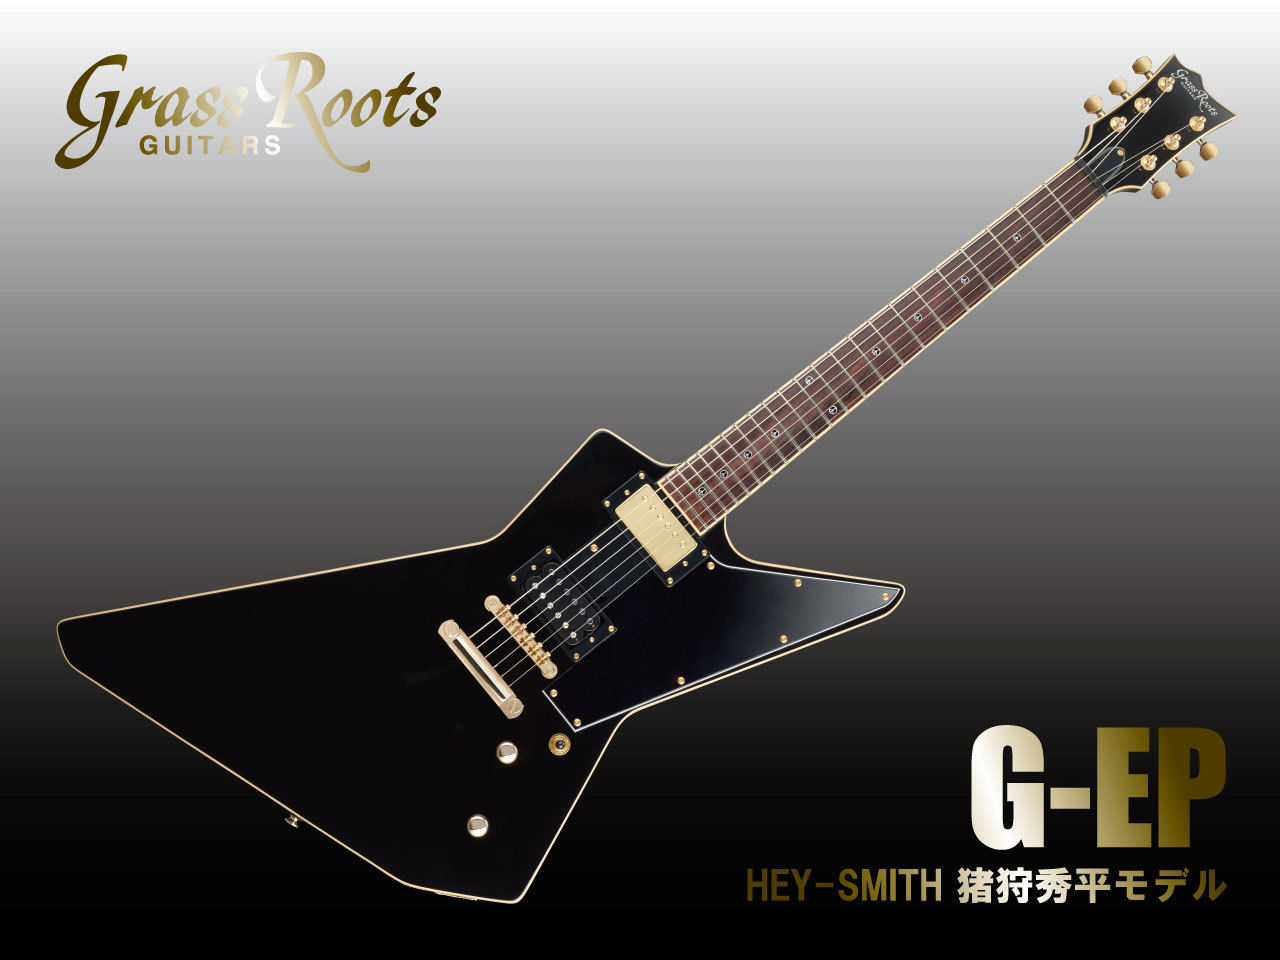 GrassRoots G-EP (Black) / HEY-SMITH 猪狩秀平モデル（新品/送料無料